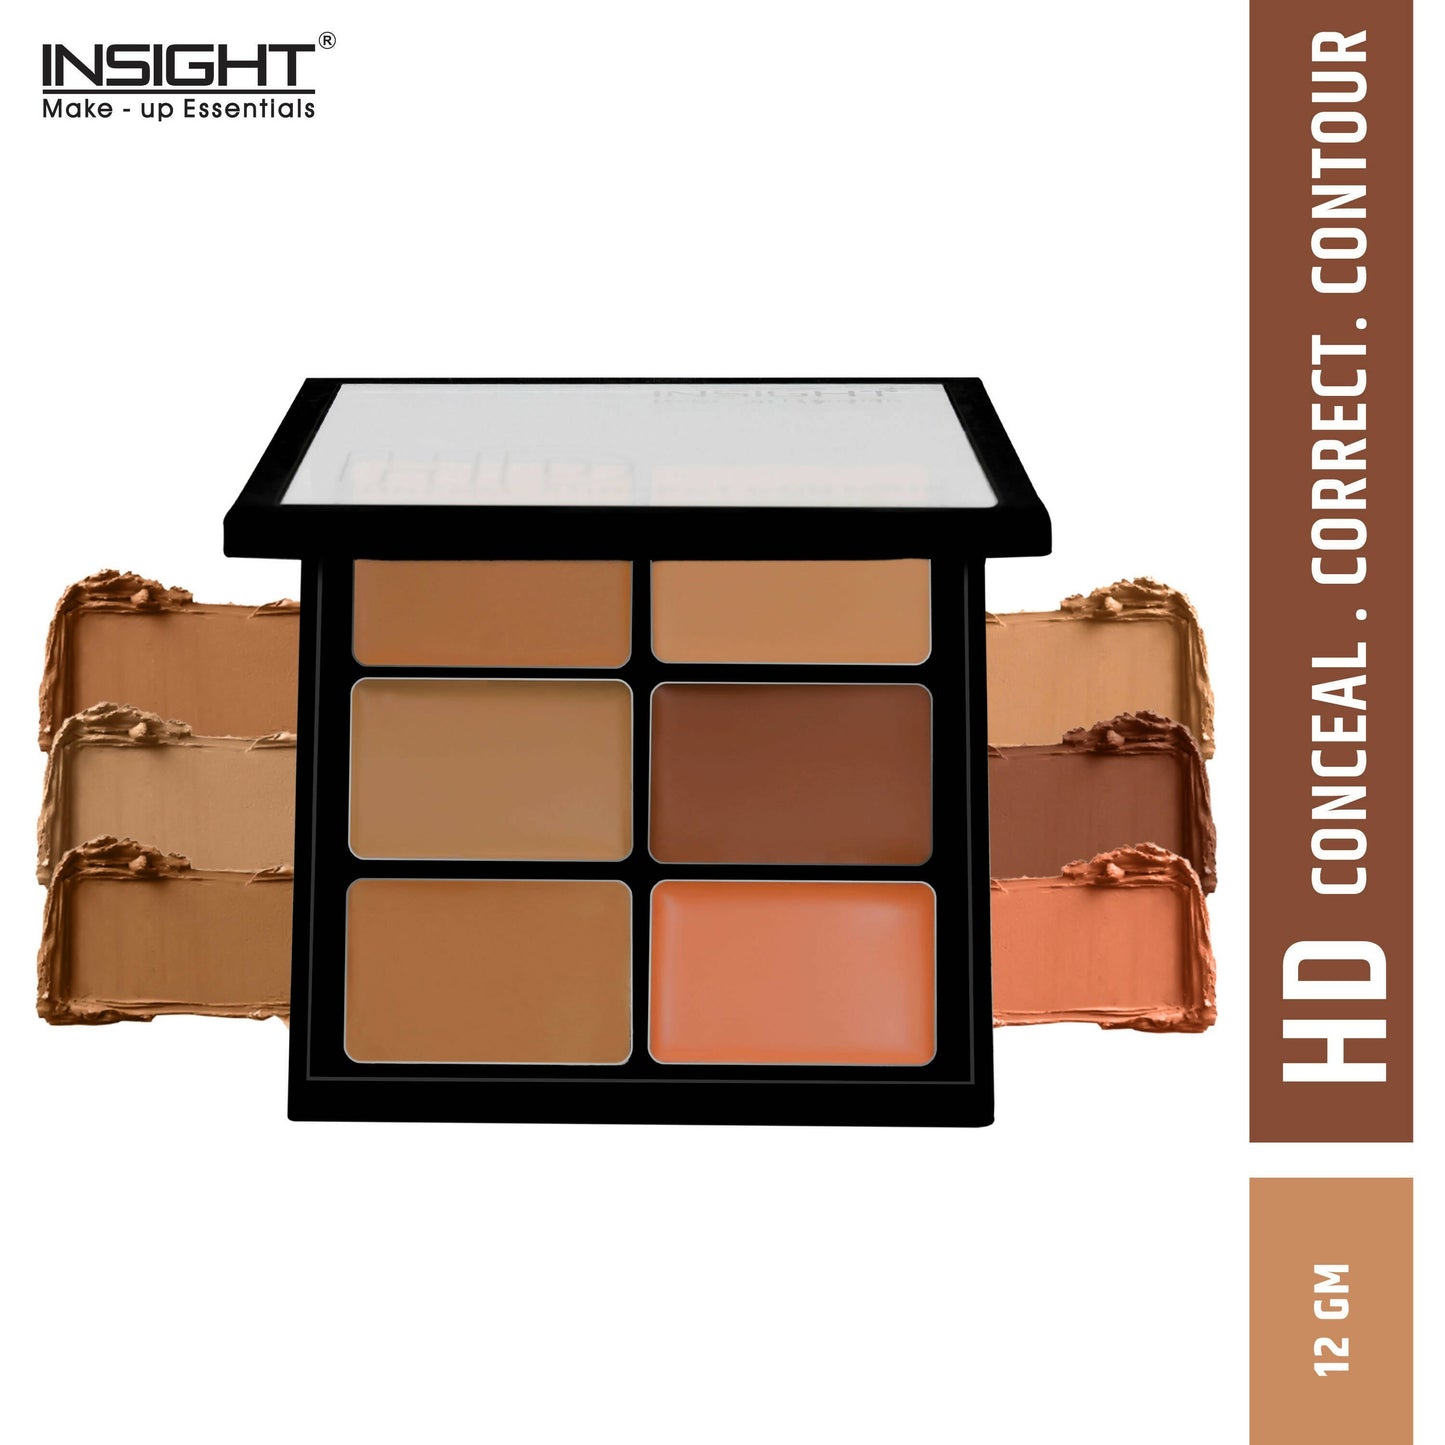 Insight Cosmetics HD Conceal Correct Contour - Medium Skin